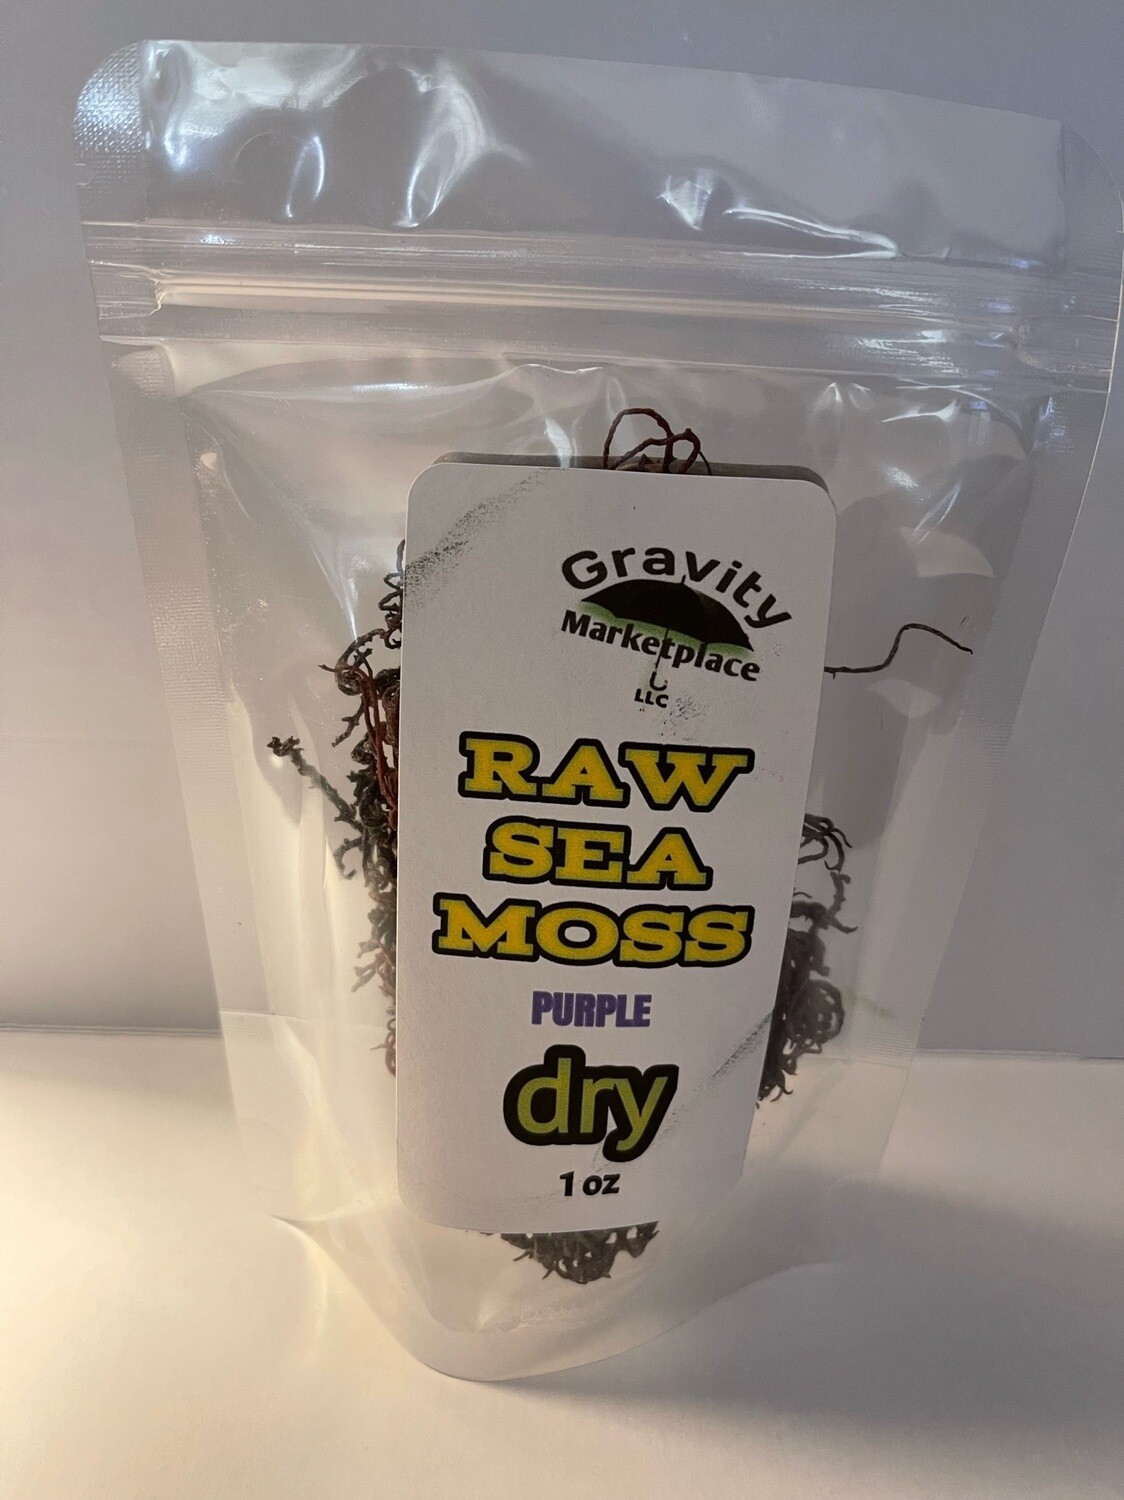 1 oz Sea Moss Dry PURPLE